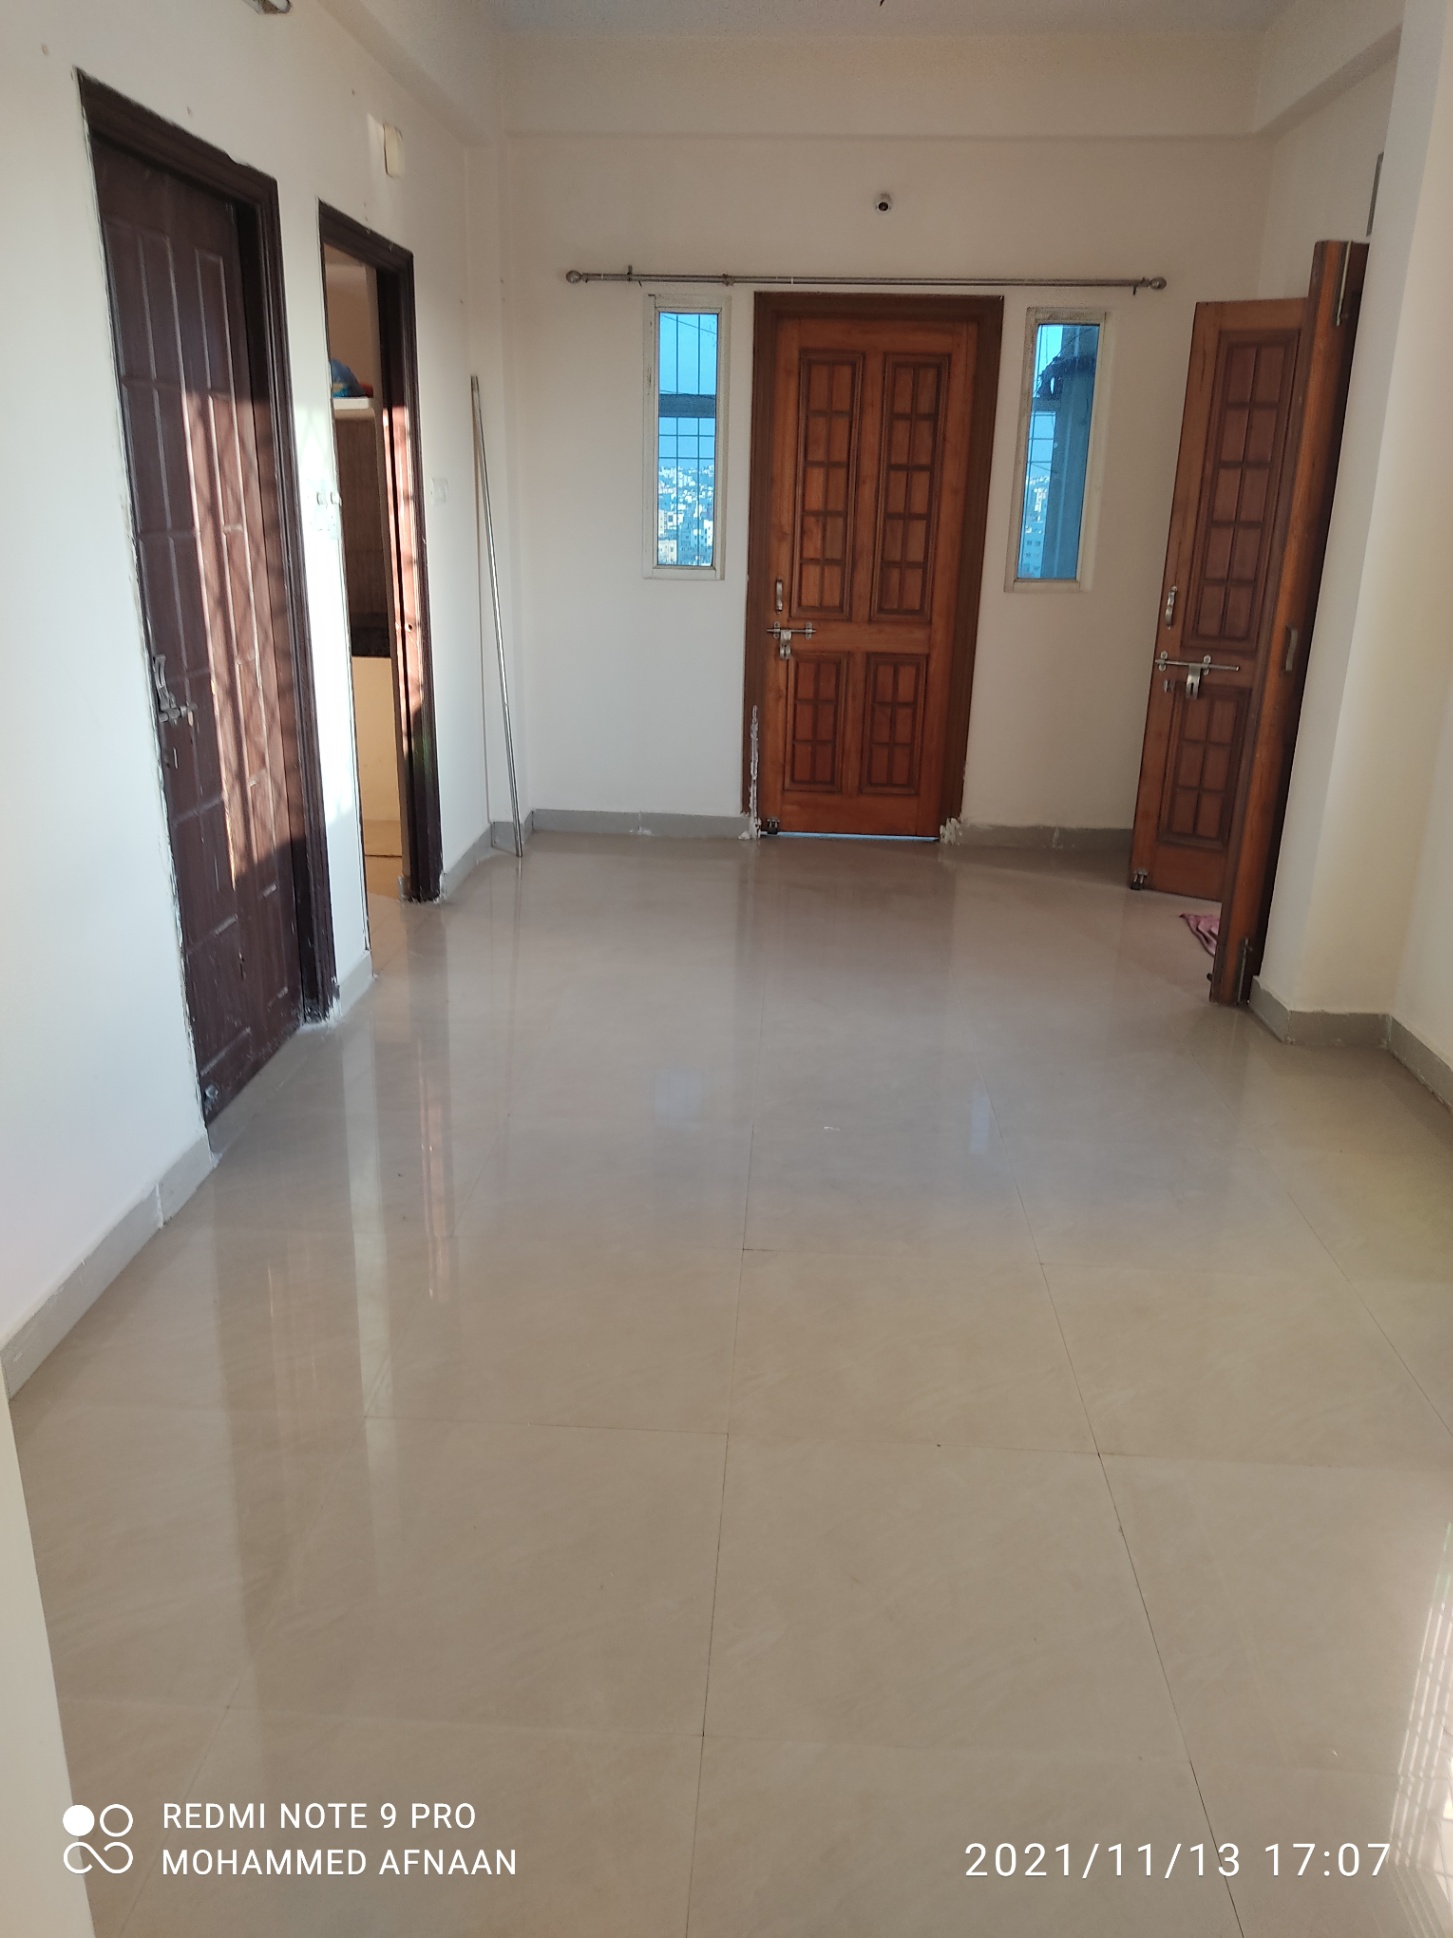 2 Bed/ 1 Bath Rent Apartment/ Flat; 800 sq. ft. carpet area, Semi Furnished for rent @Sun City, Bandlaguda Jagir